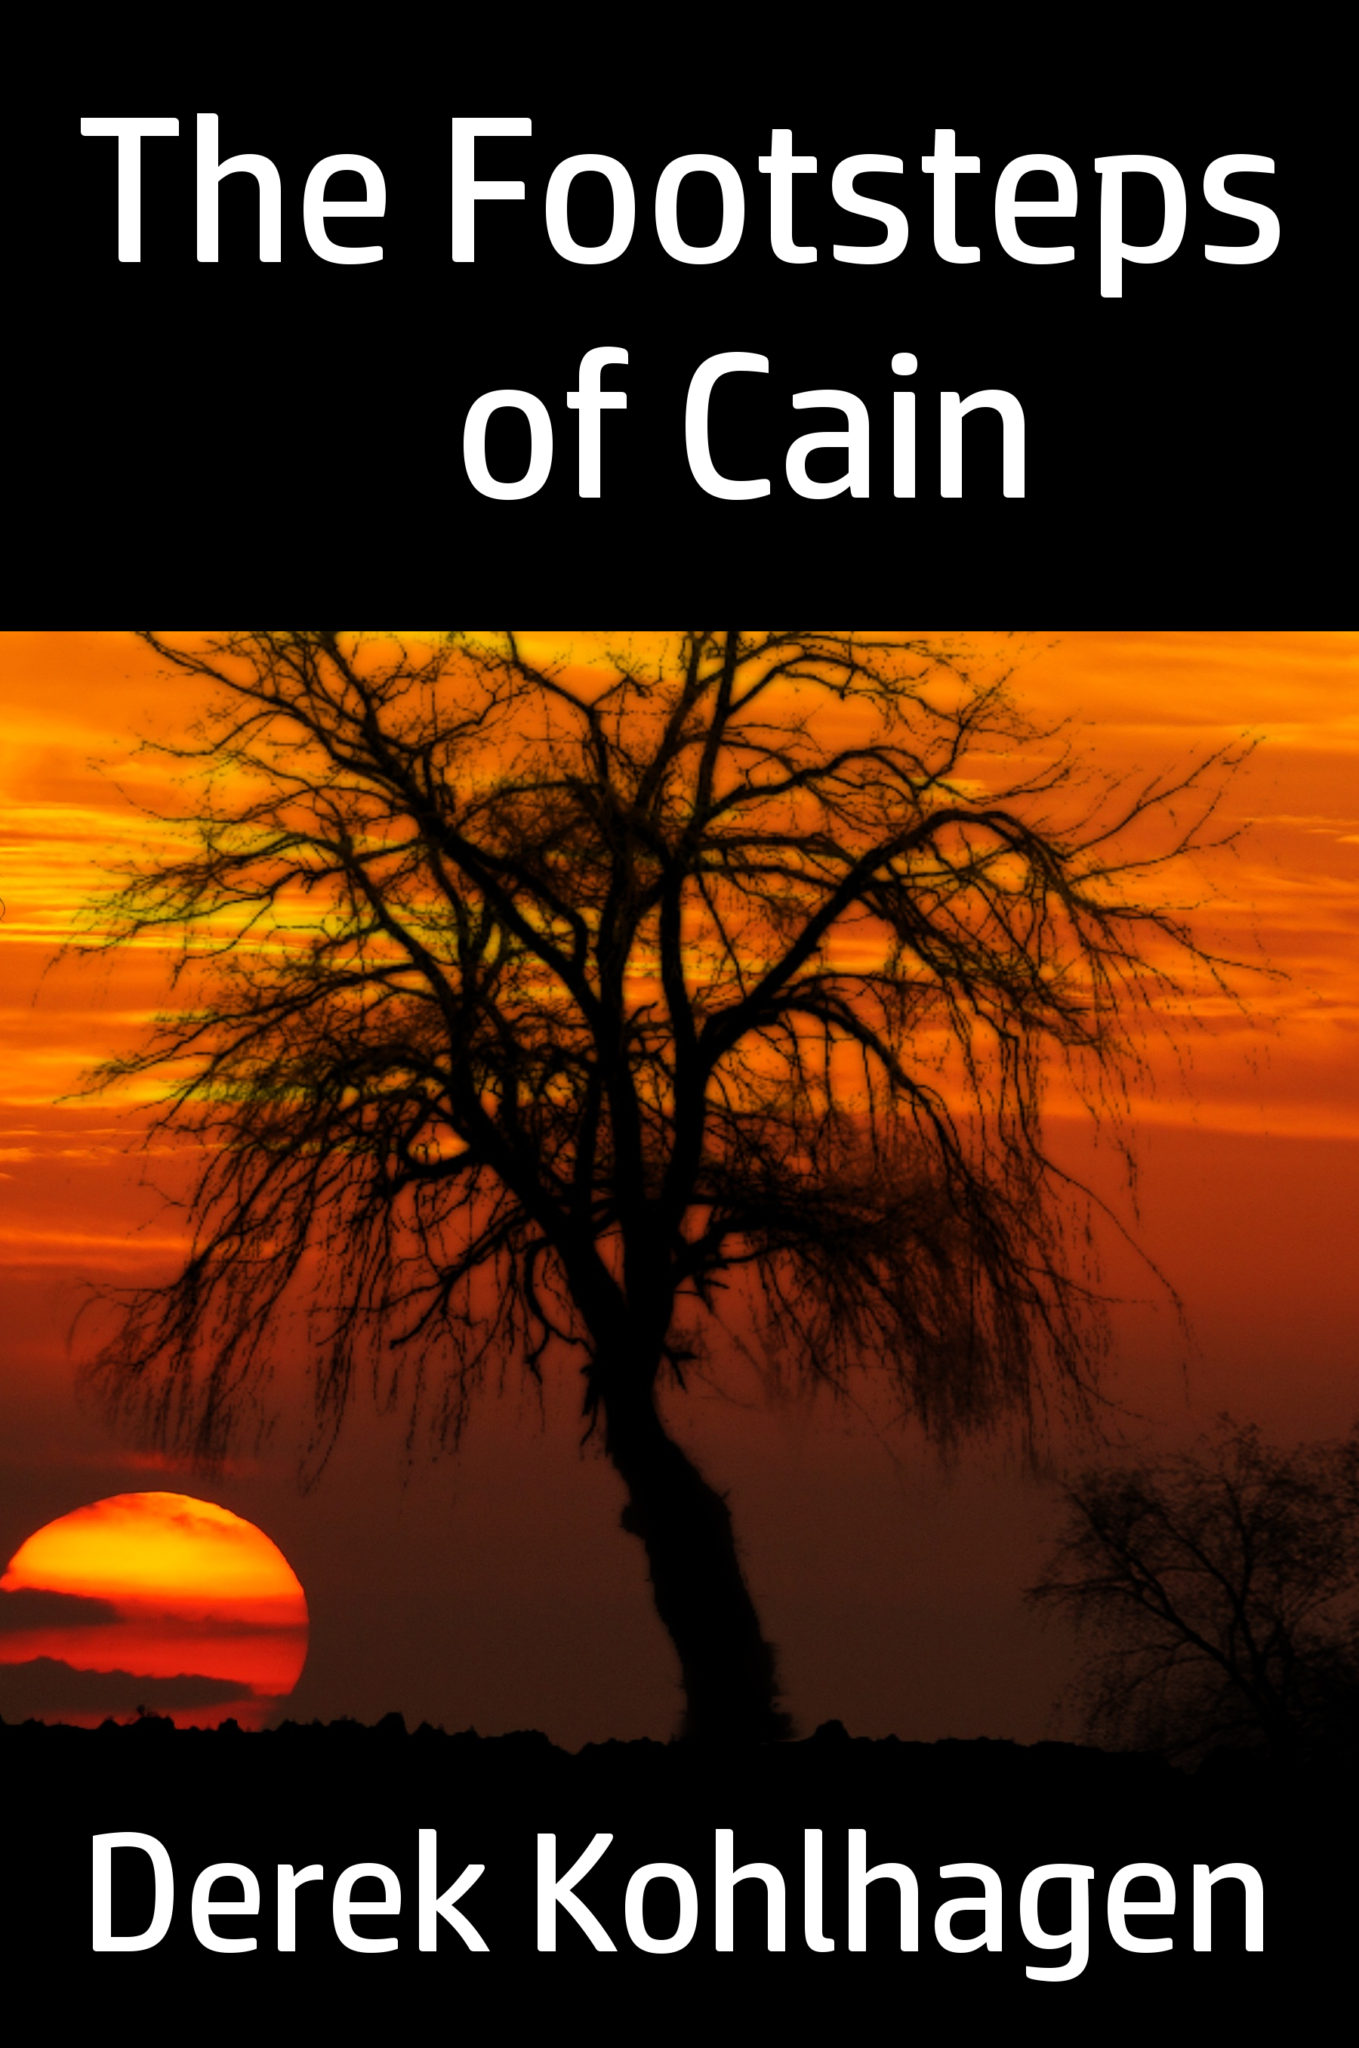 FREE: The Footsteps of Cain by Derek Kohlhagen